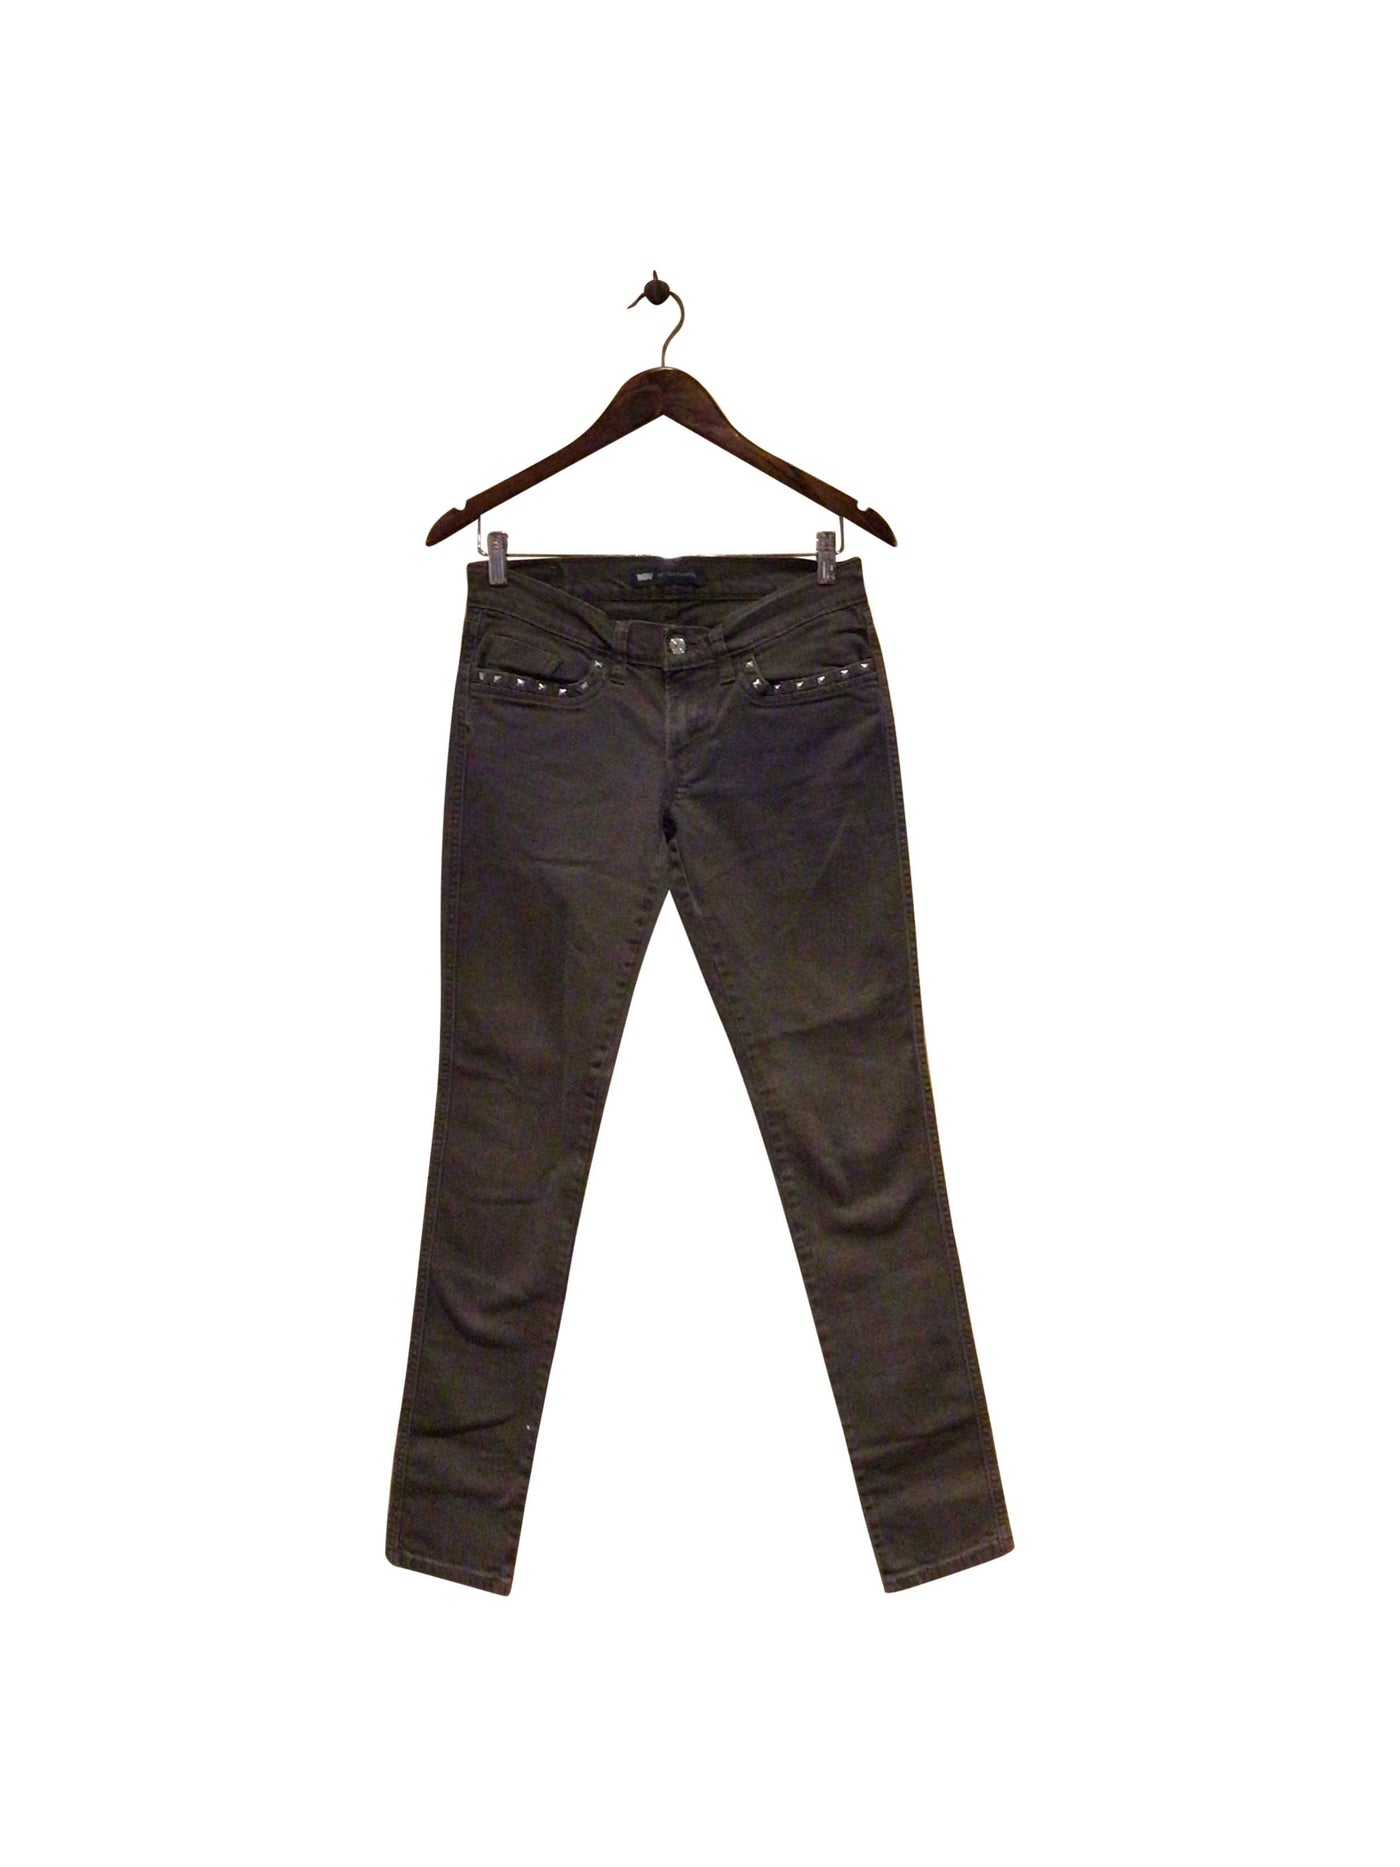 LEVI'S Regular fit Straight-legged Jean in Brown  -  28x30  24.00 Koop